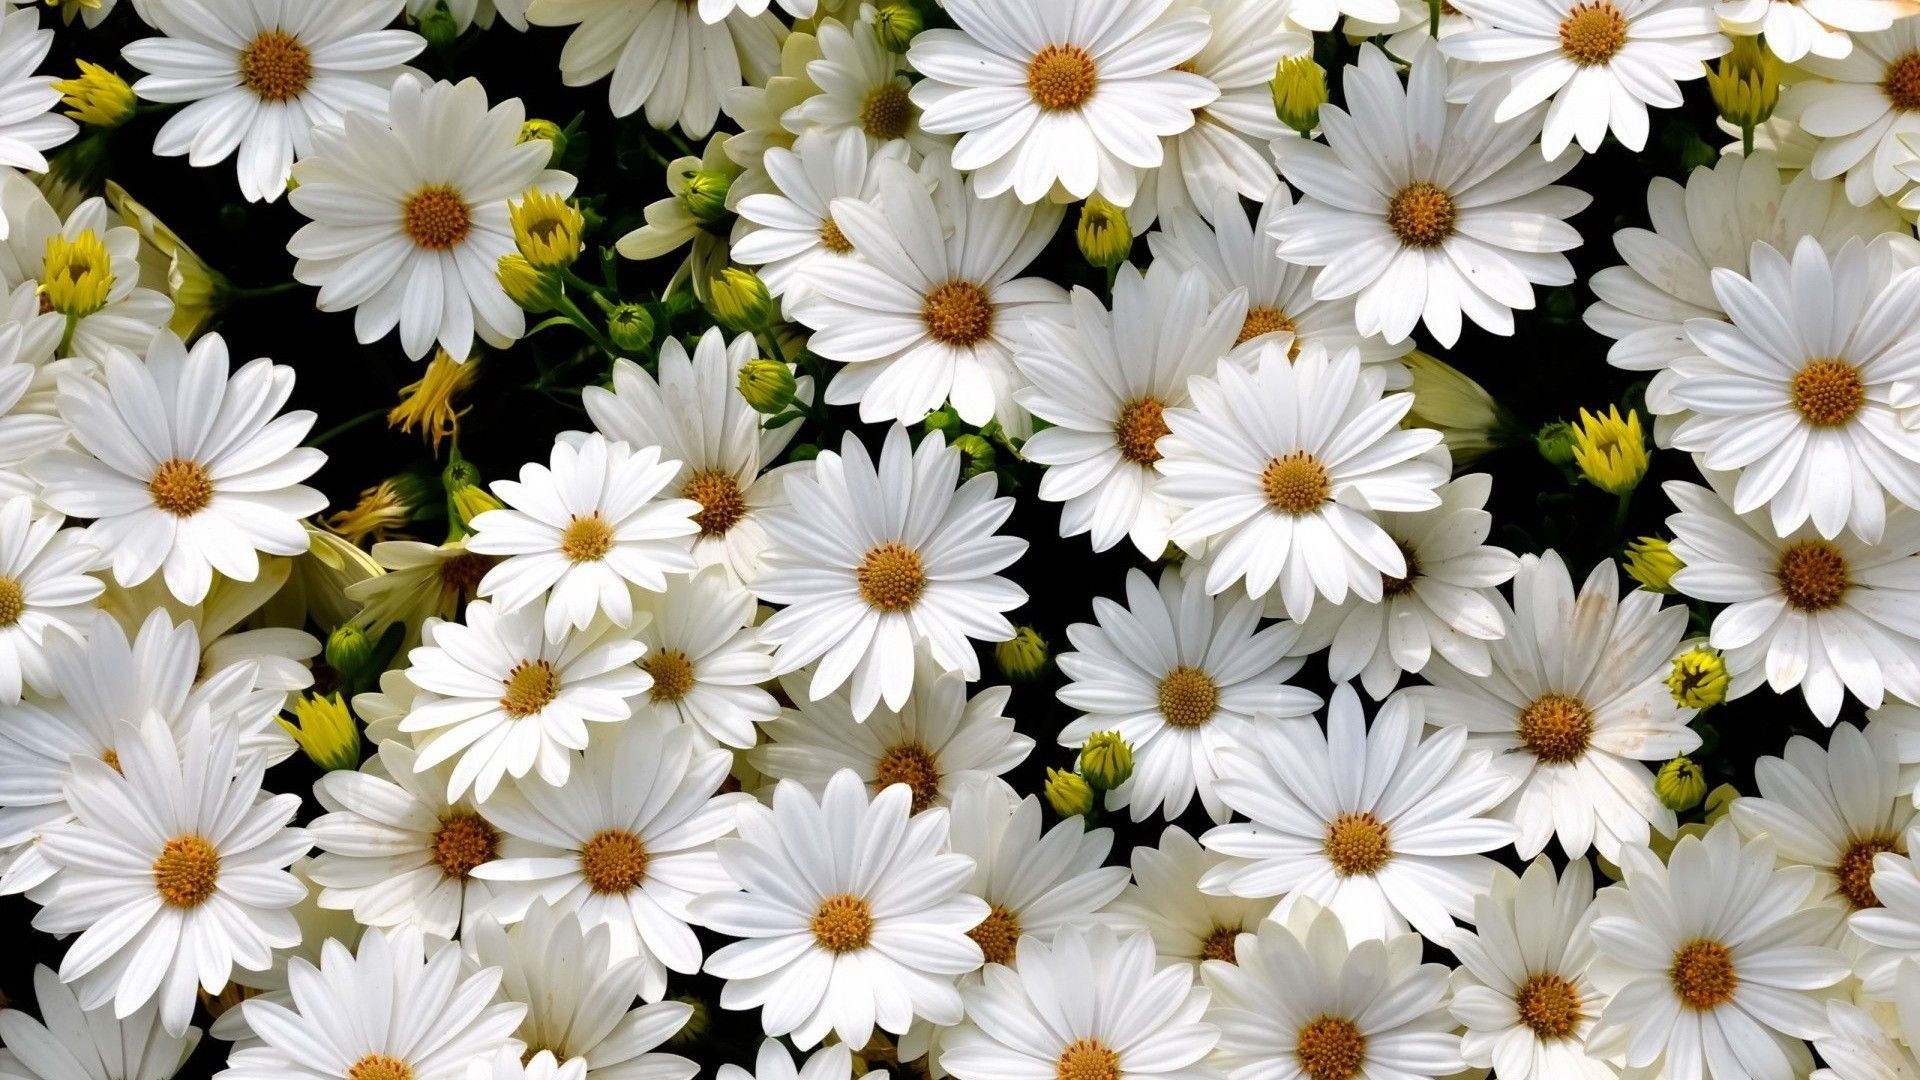 A close up of many white daisies - Daisy